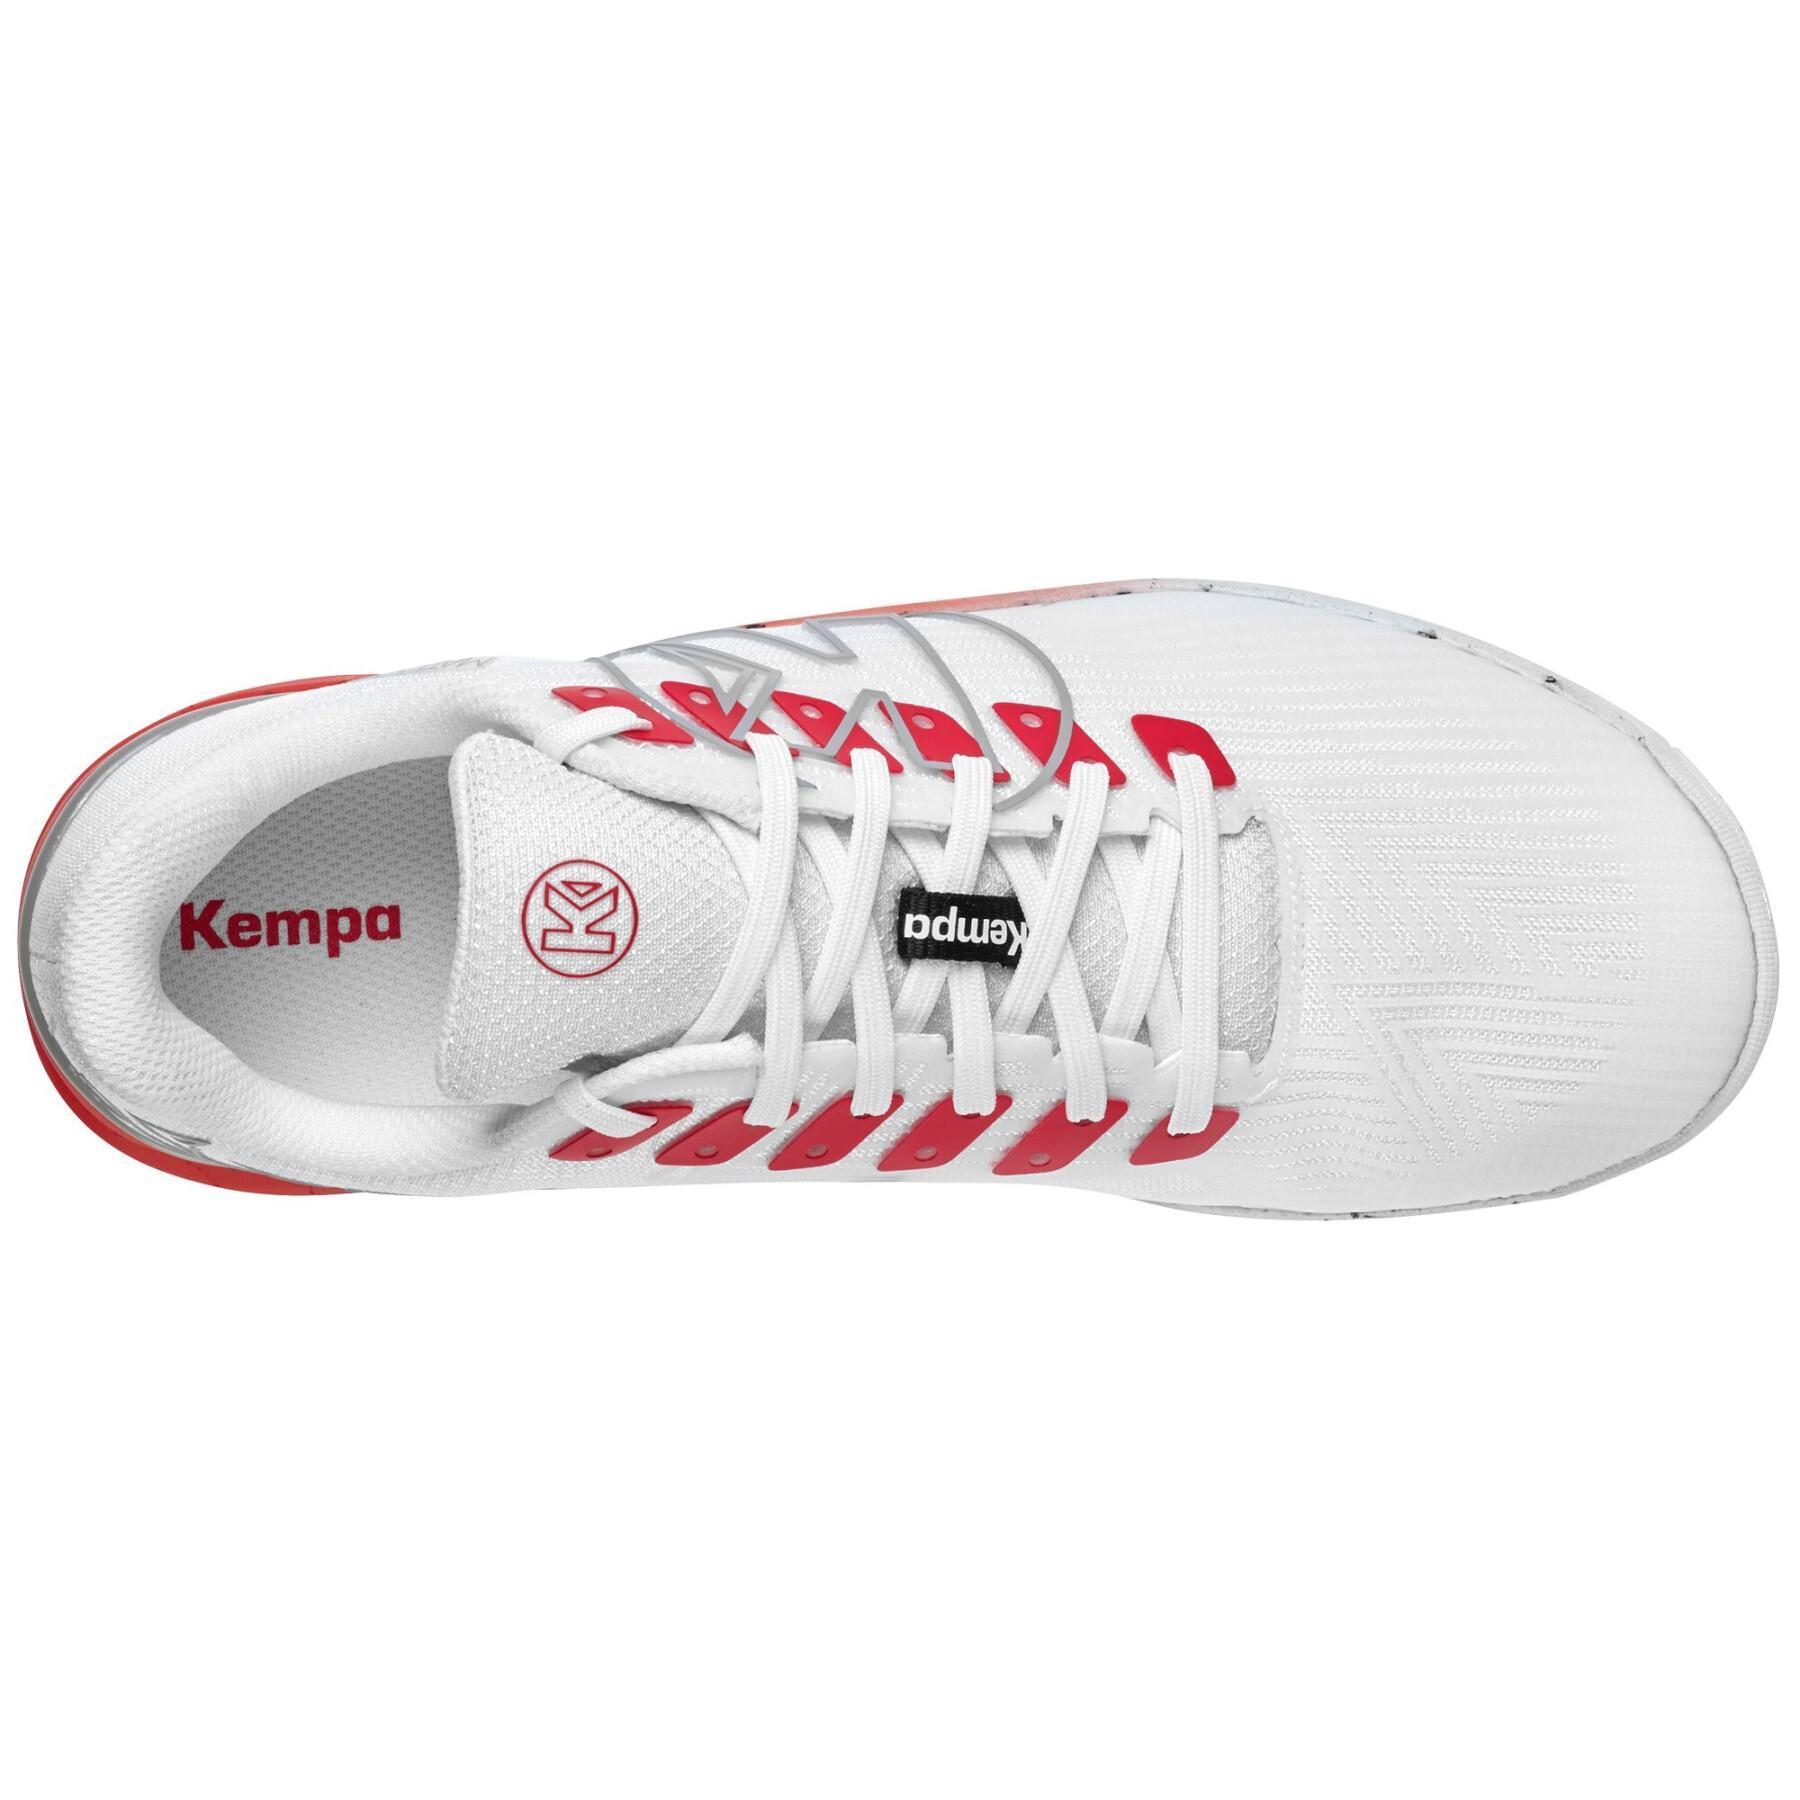 Sapatos indoor femme Kempa Attack Pro 2.0